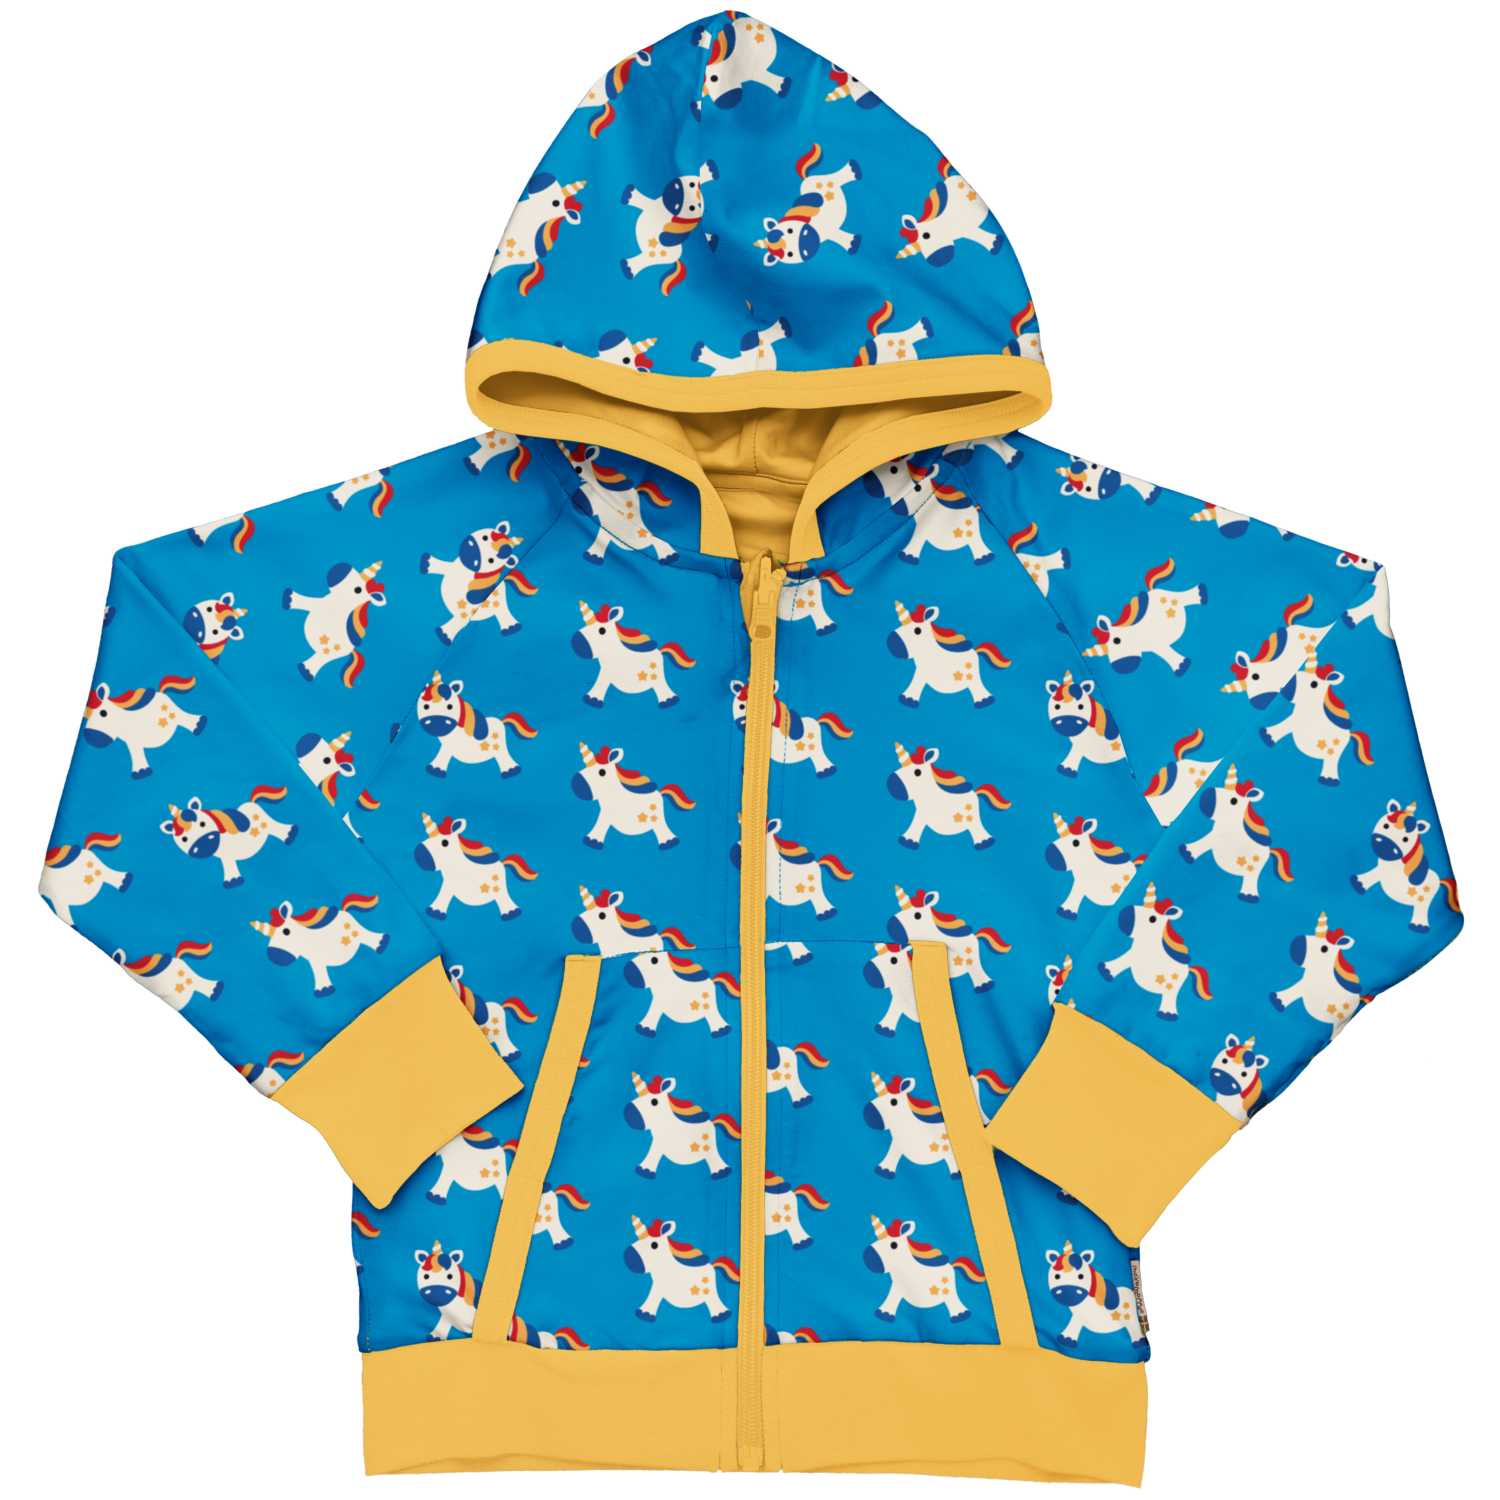 Maxomorra Reversible Hooded Sweatshirt Unicorn Tales Clothing 2-3YRS / Blue,3-4YRS / Blue,4-5YRS / Blue,5-6YRS / Blue,7-8YRS / Blue